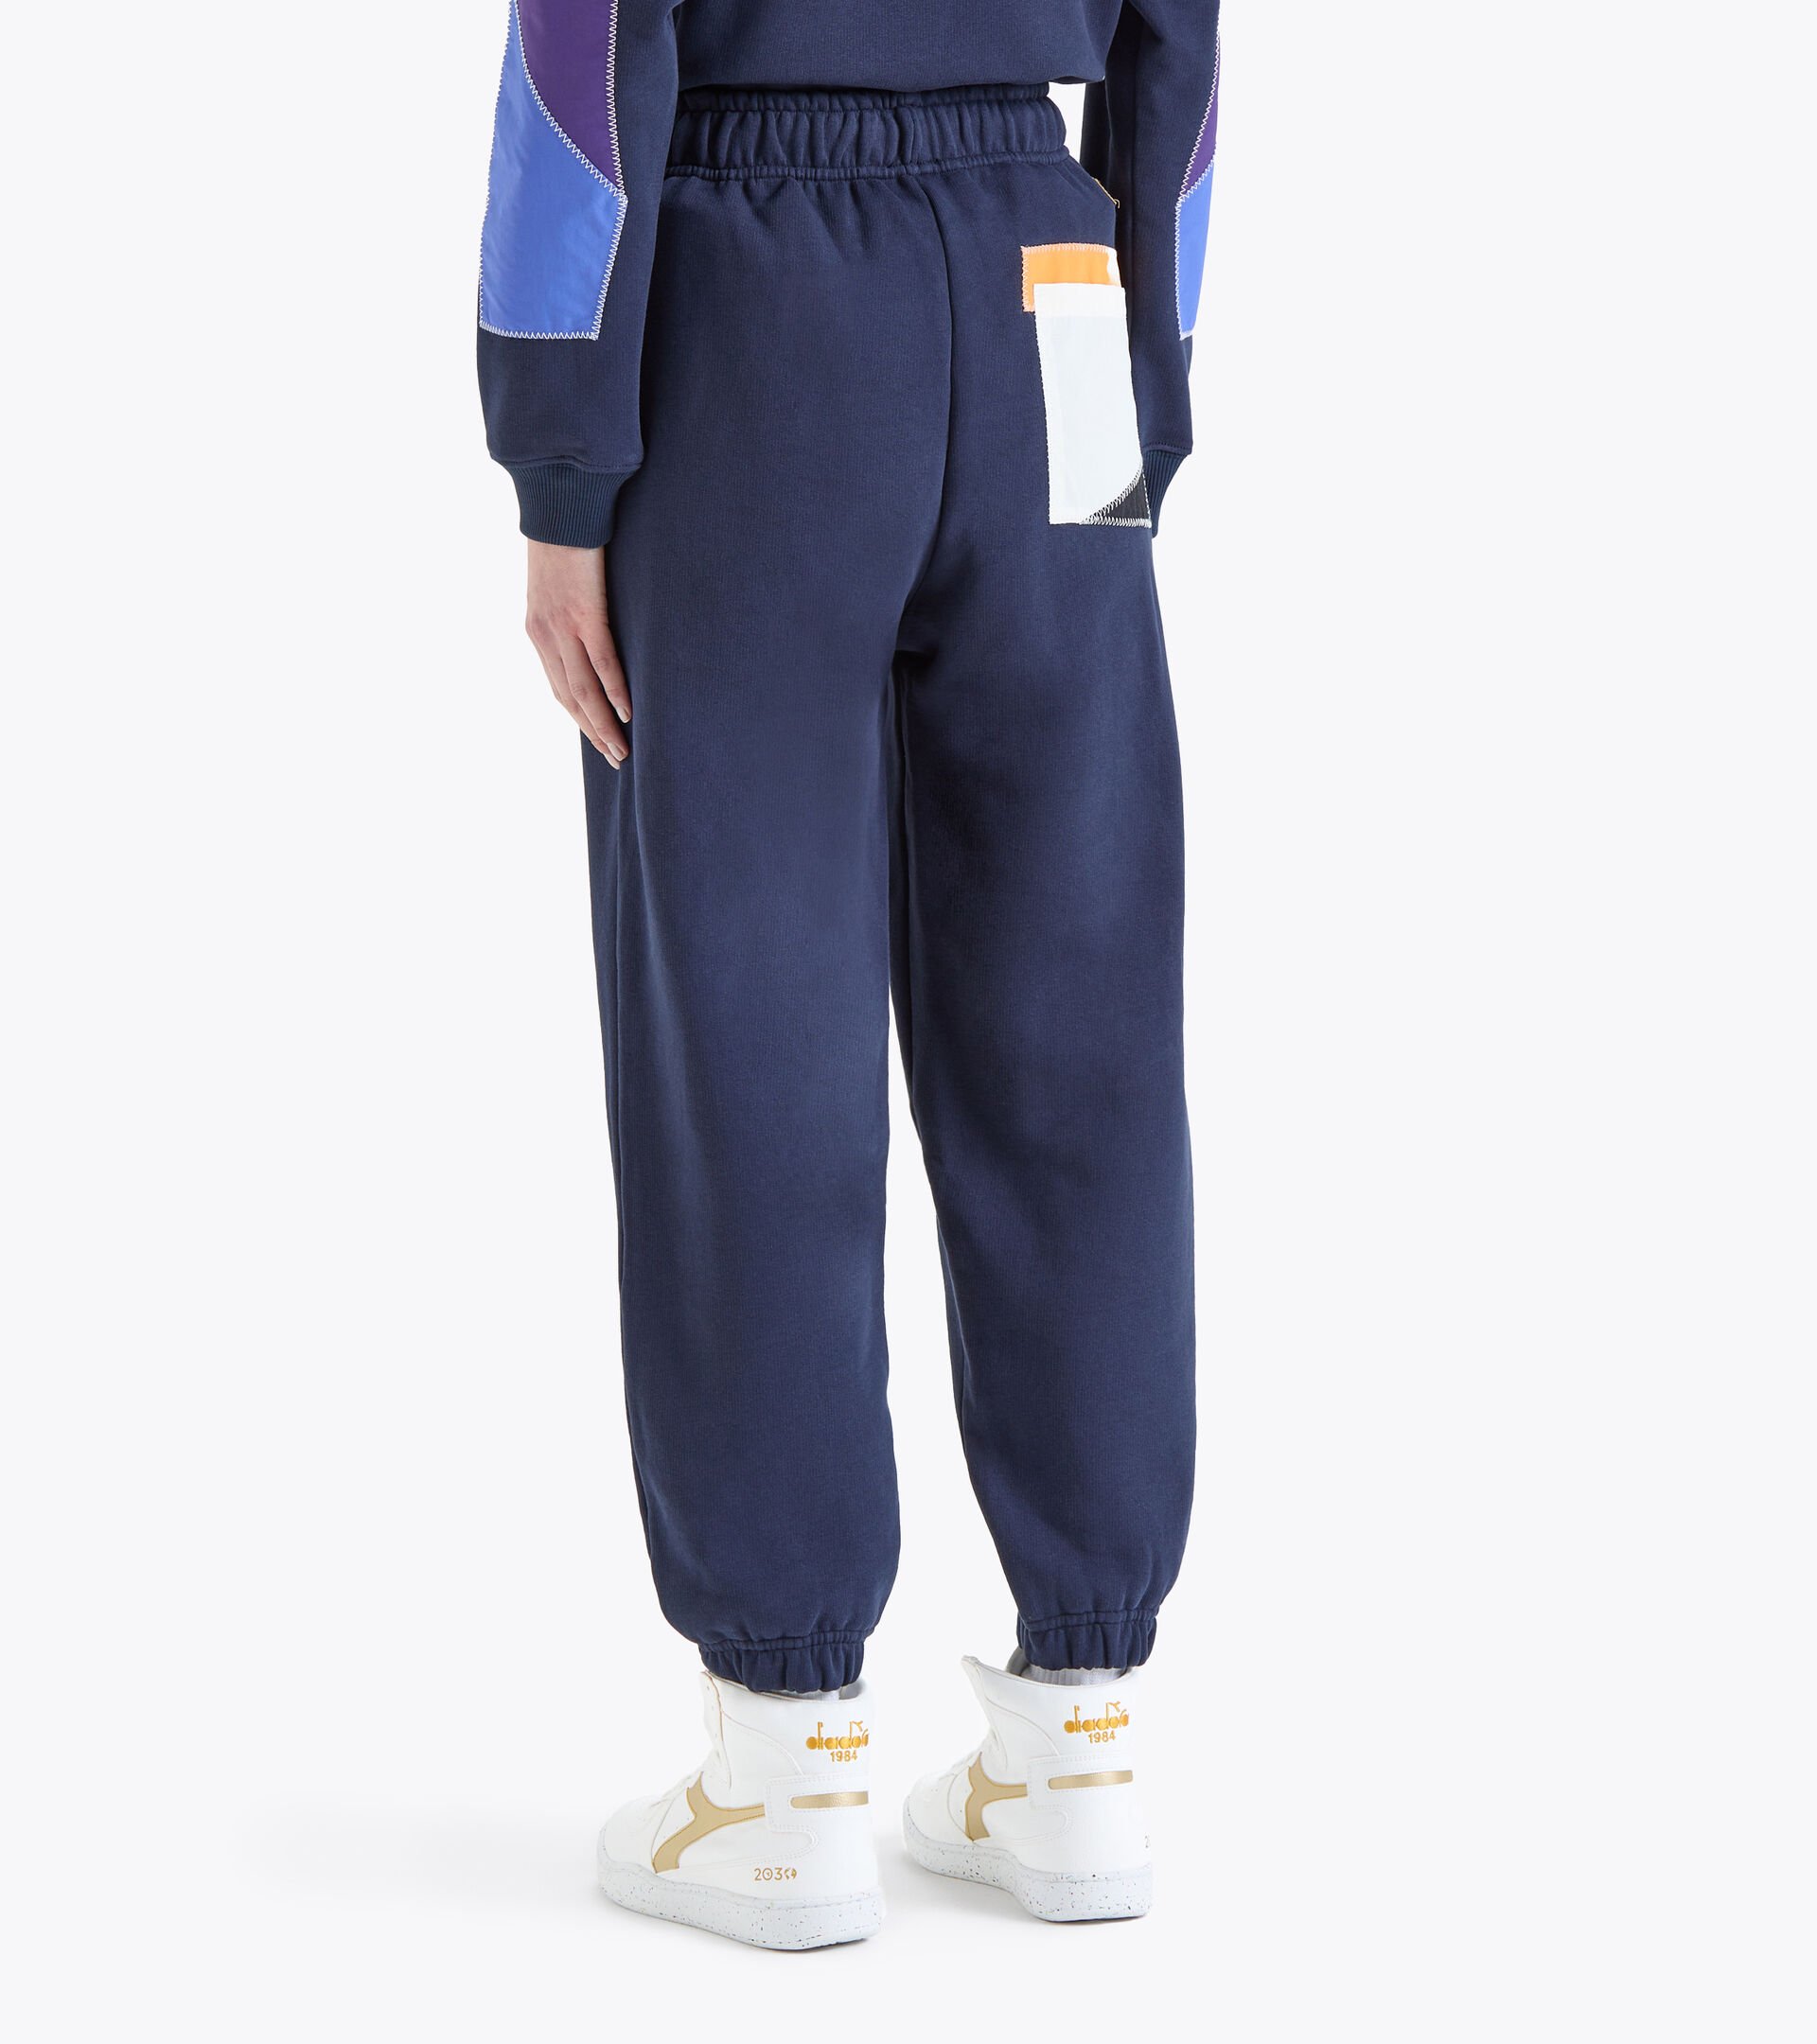 Pantalone sportivo Made in Italy 2030 - Donna L. PANT 2030 BLU CORSARO - Diadora